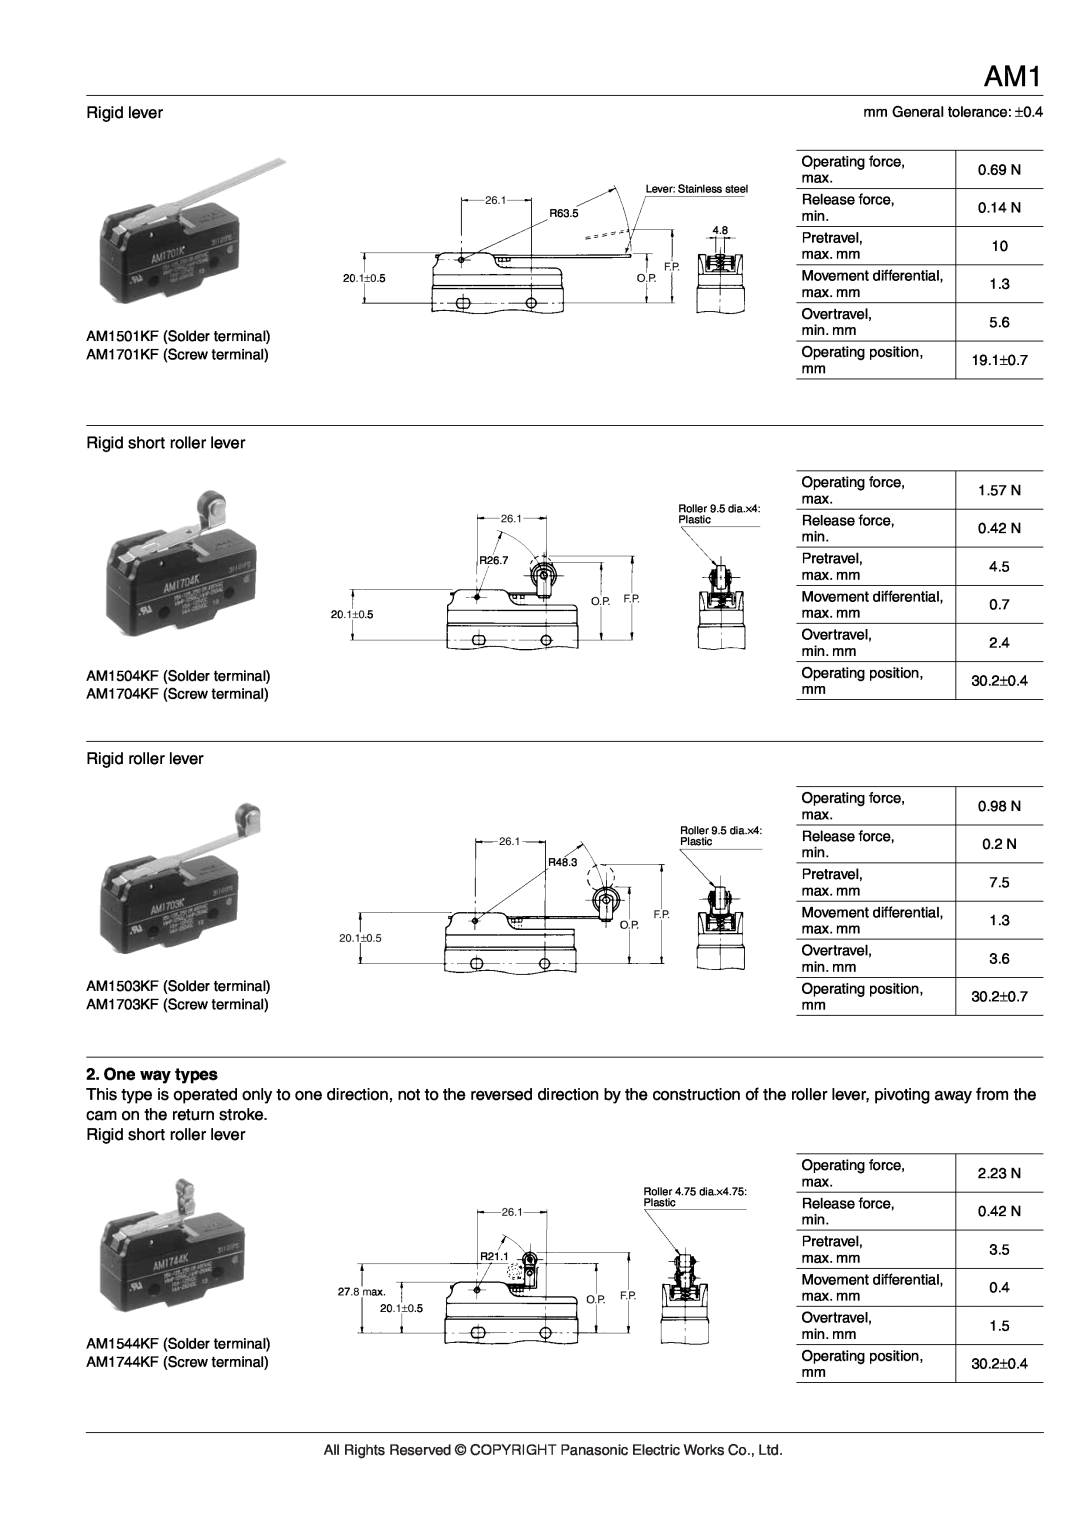 Panasonic AM1 (NZ BASIC) specifications Rigid lever, Rigid short roller lever, Rigid roller lever, One way types 